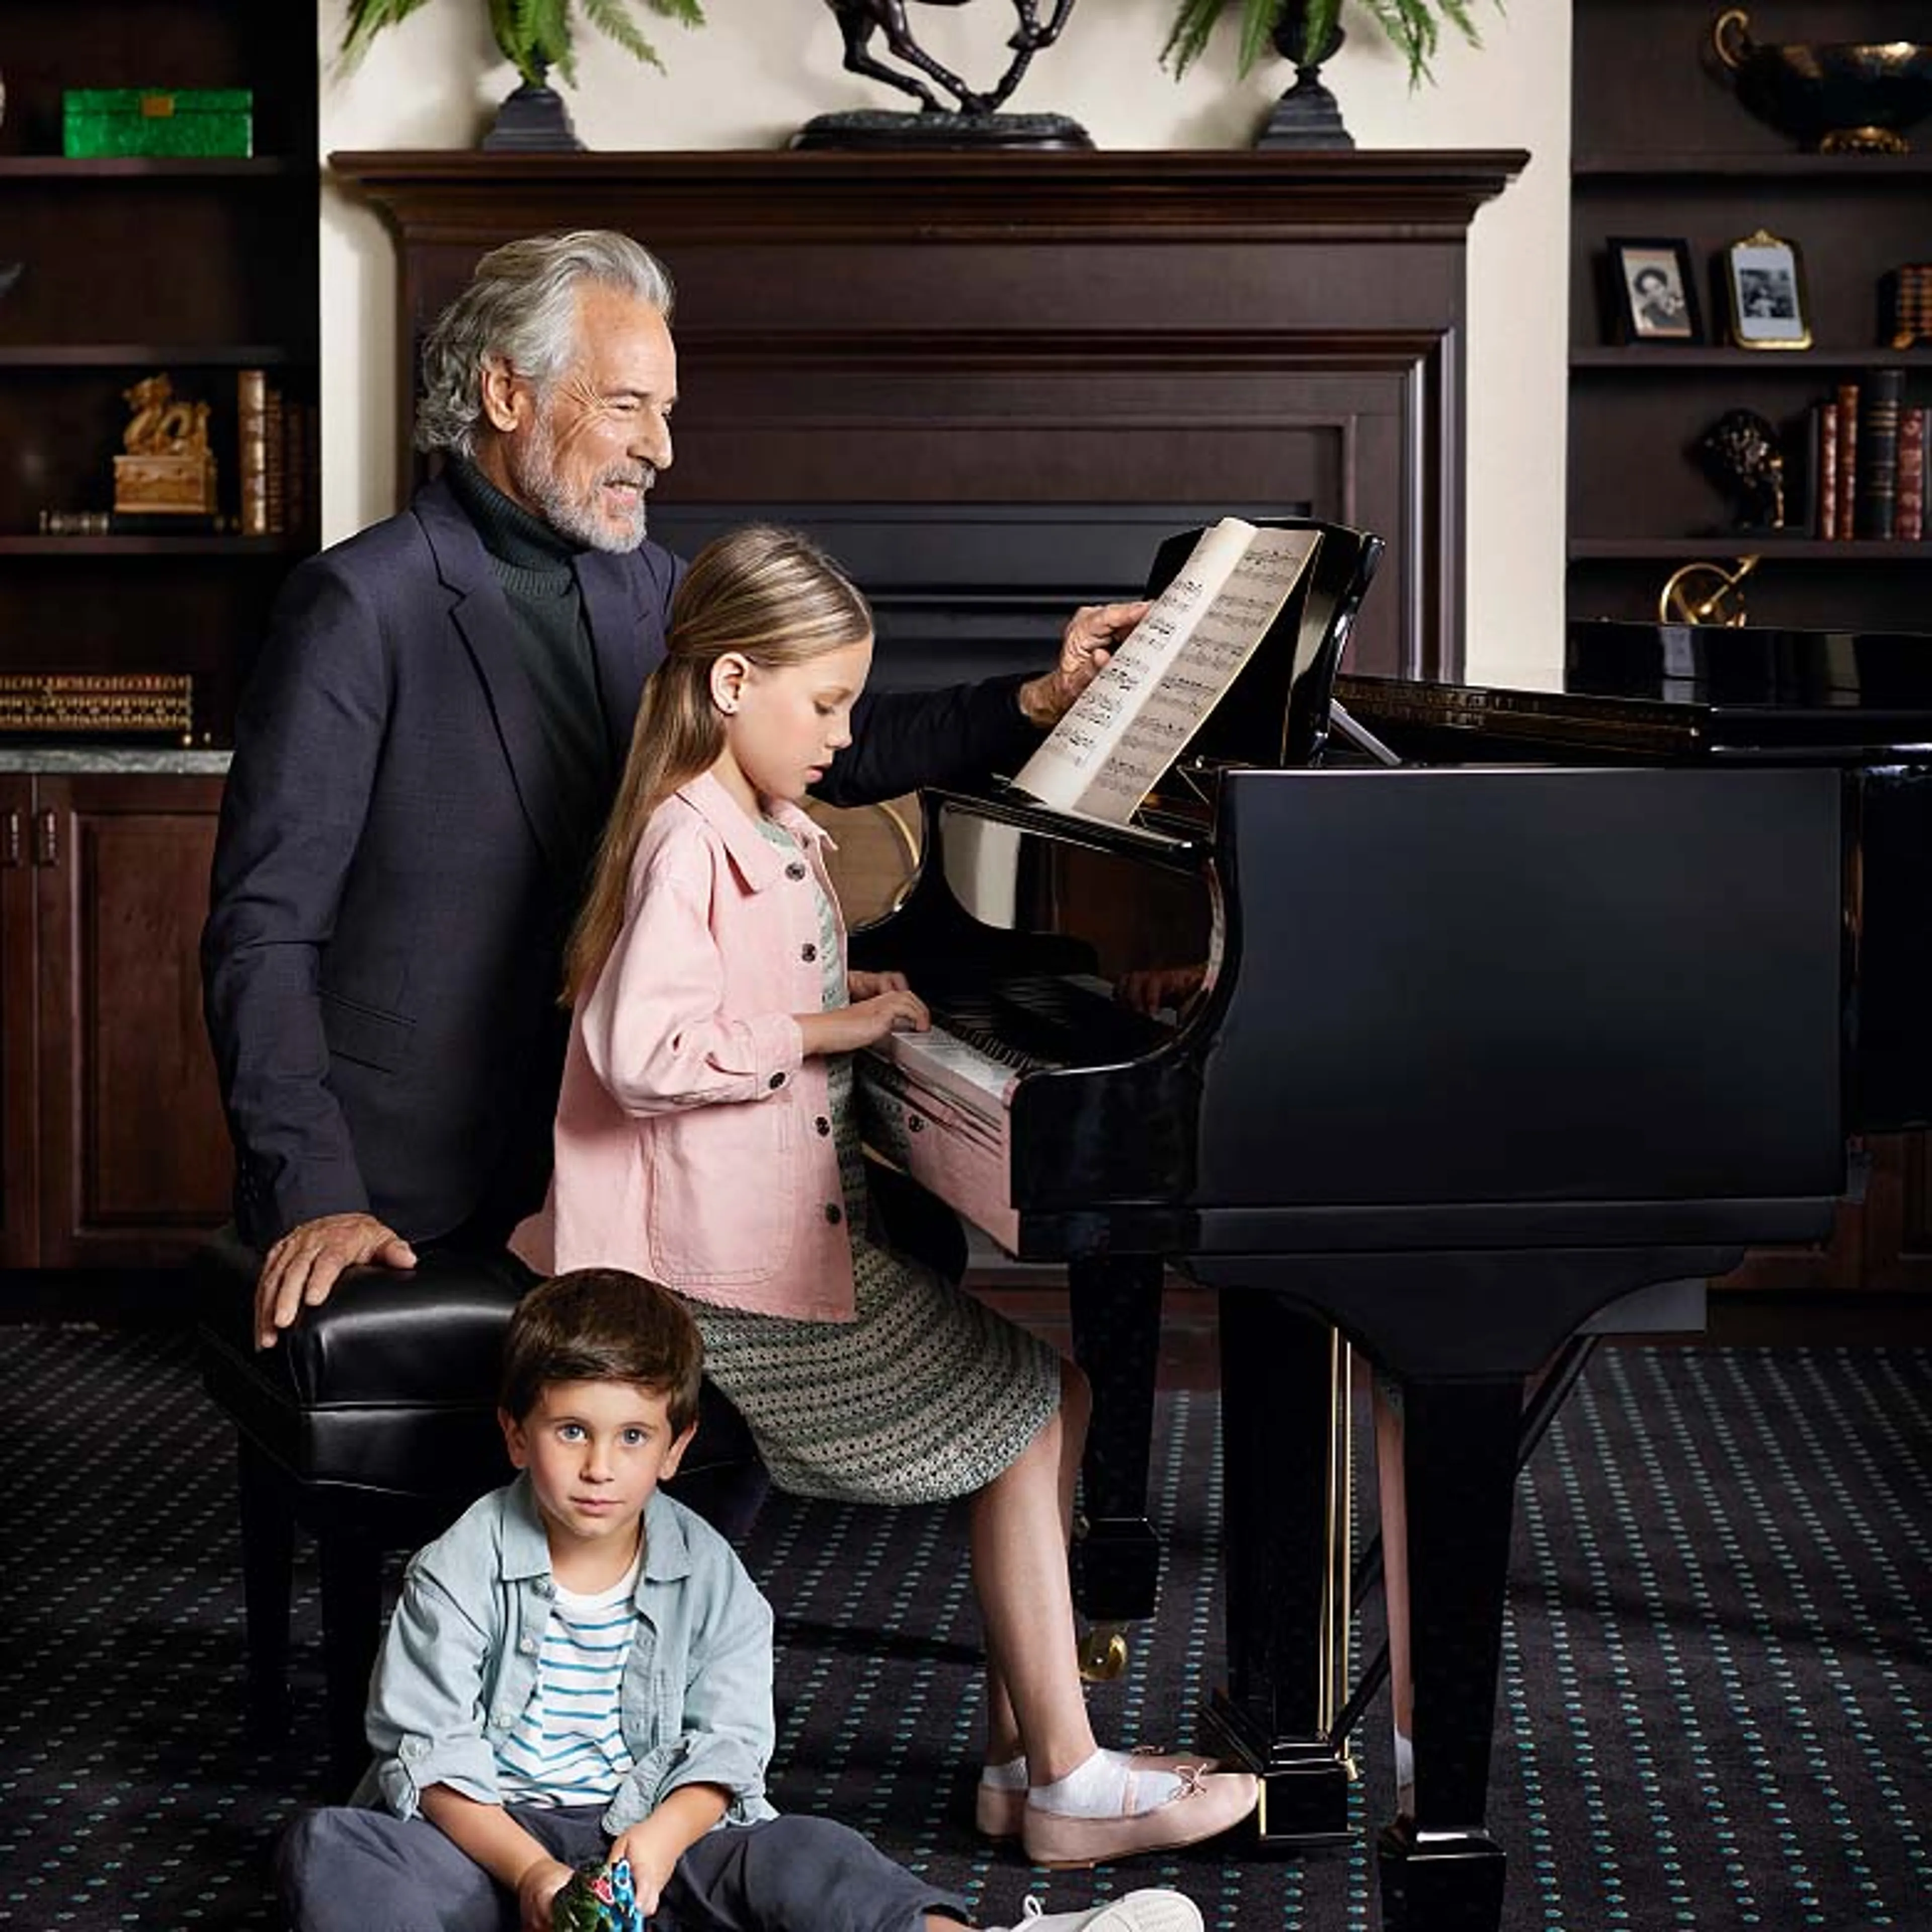 Precious moments with grandchildren at the baby grand piano